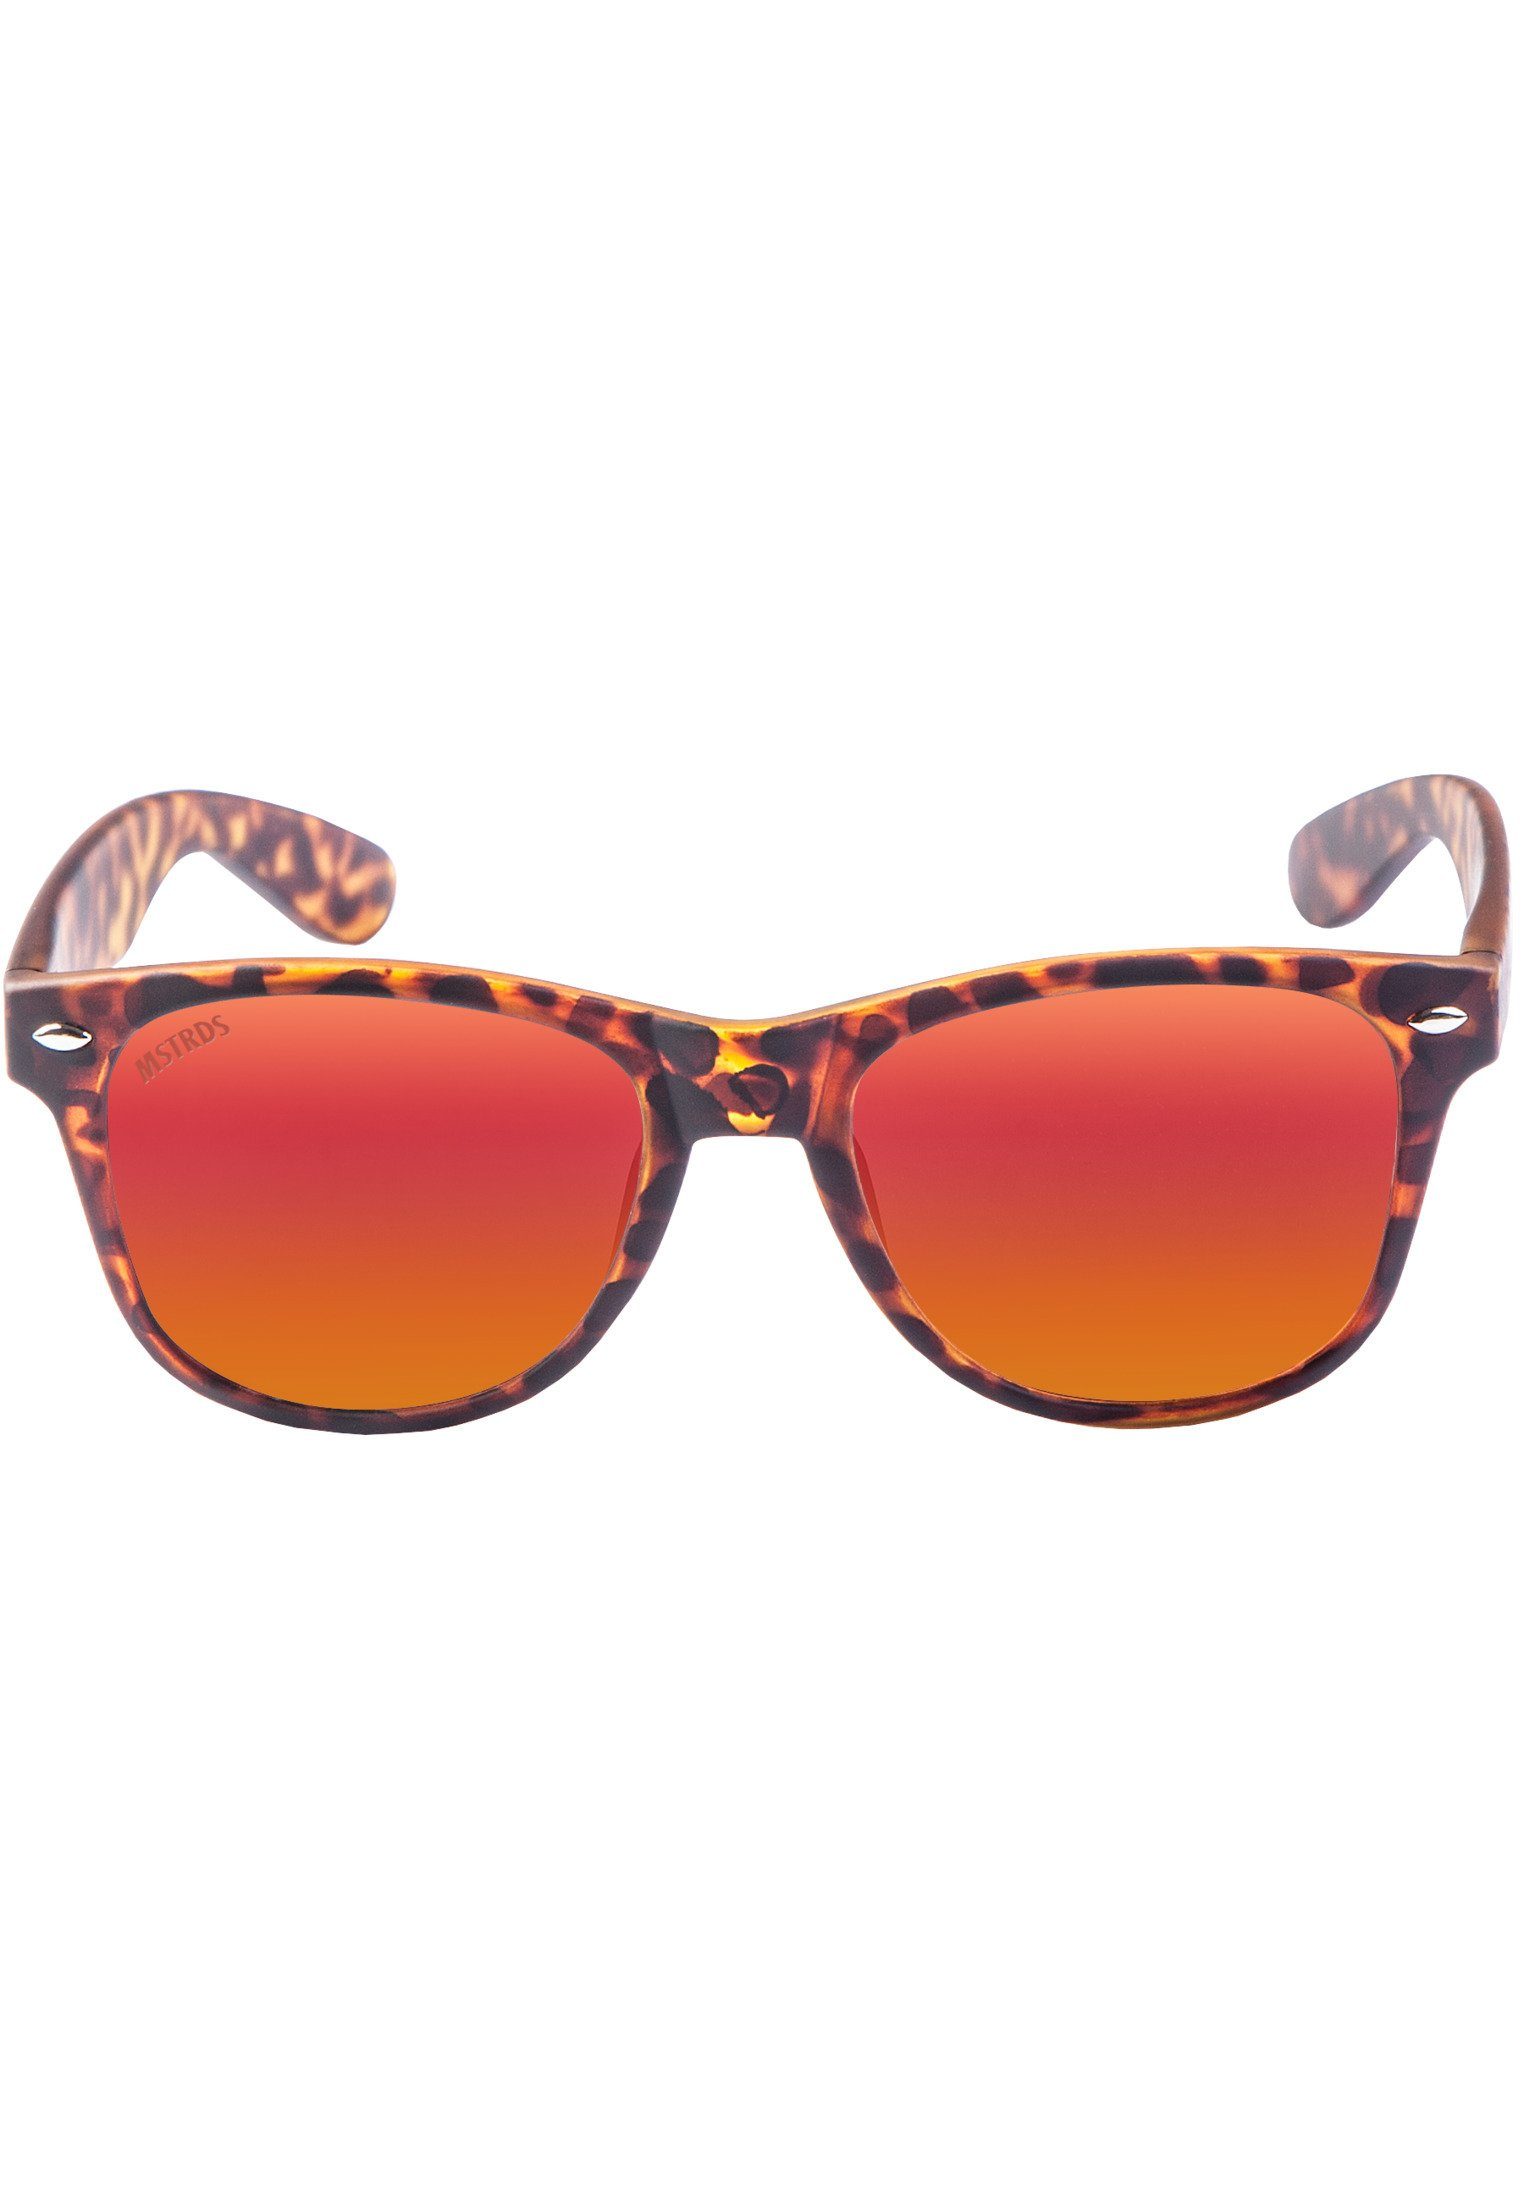 MSTRDS Sonnenbrille Accessoires Sunglasses Likoma Youth, Ideal auch für  Sport im Freien geeignet